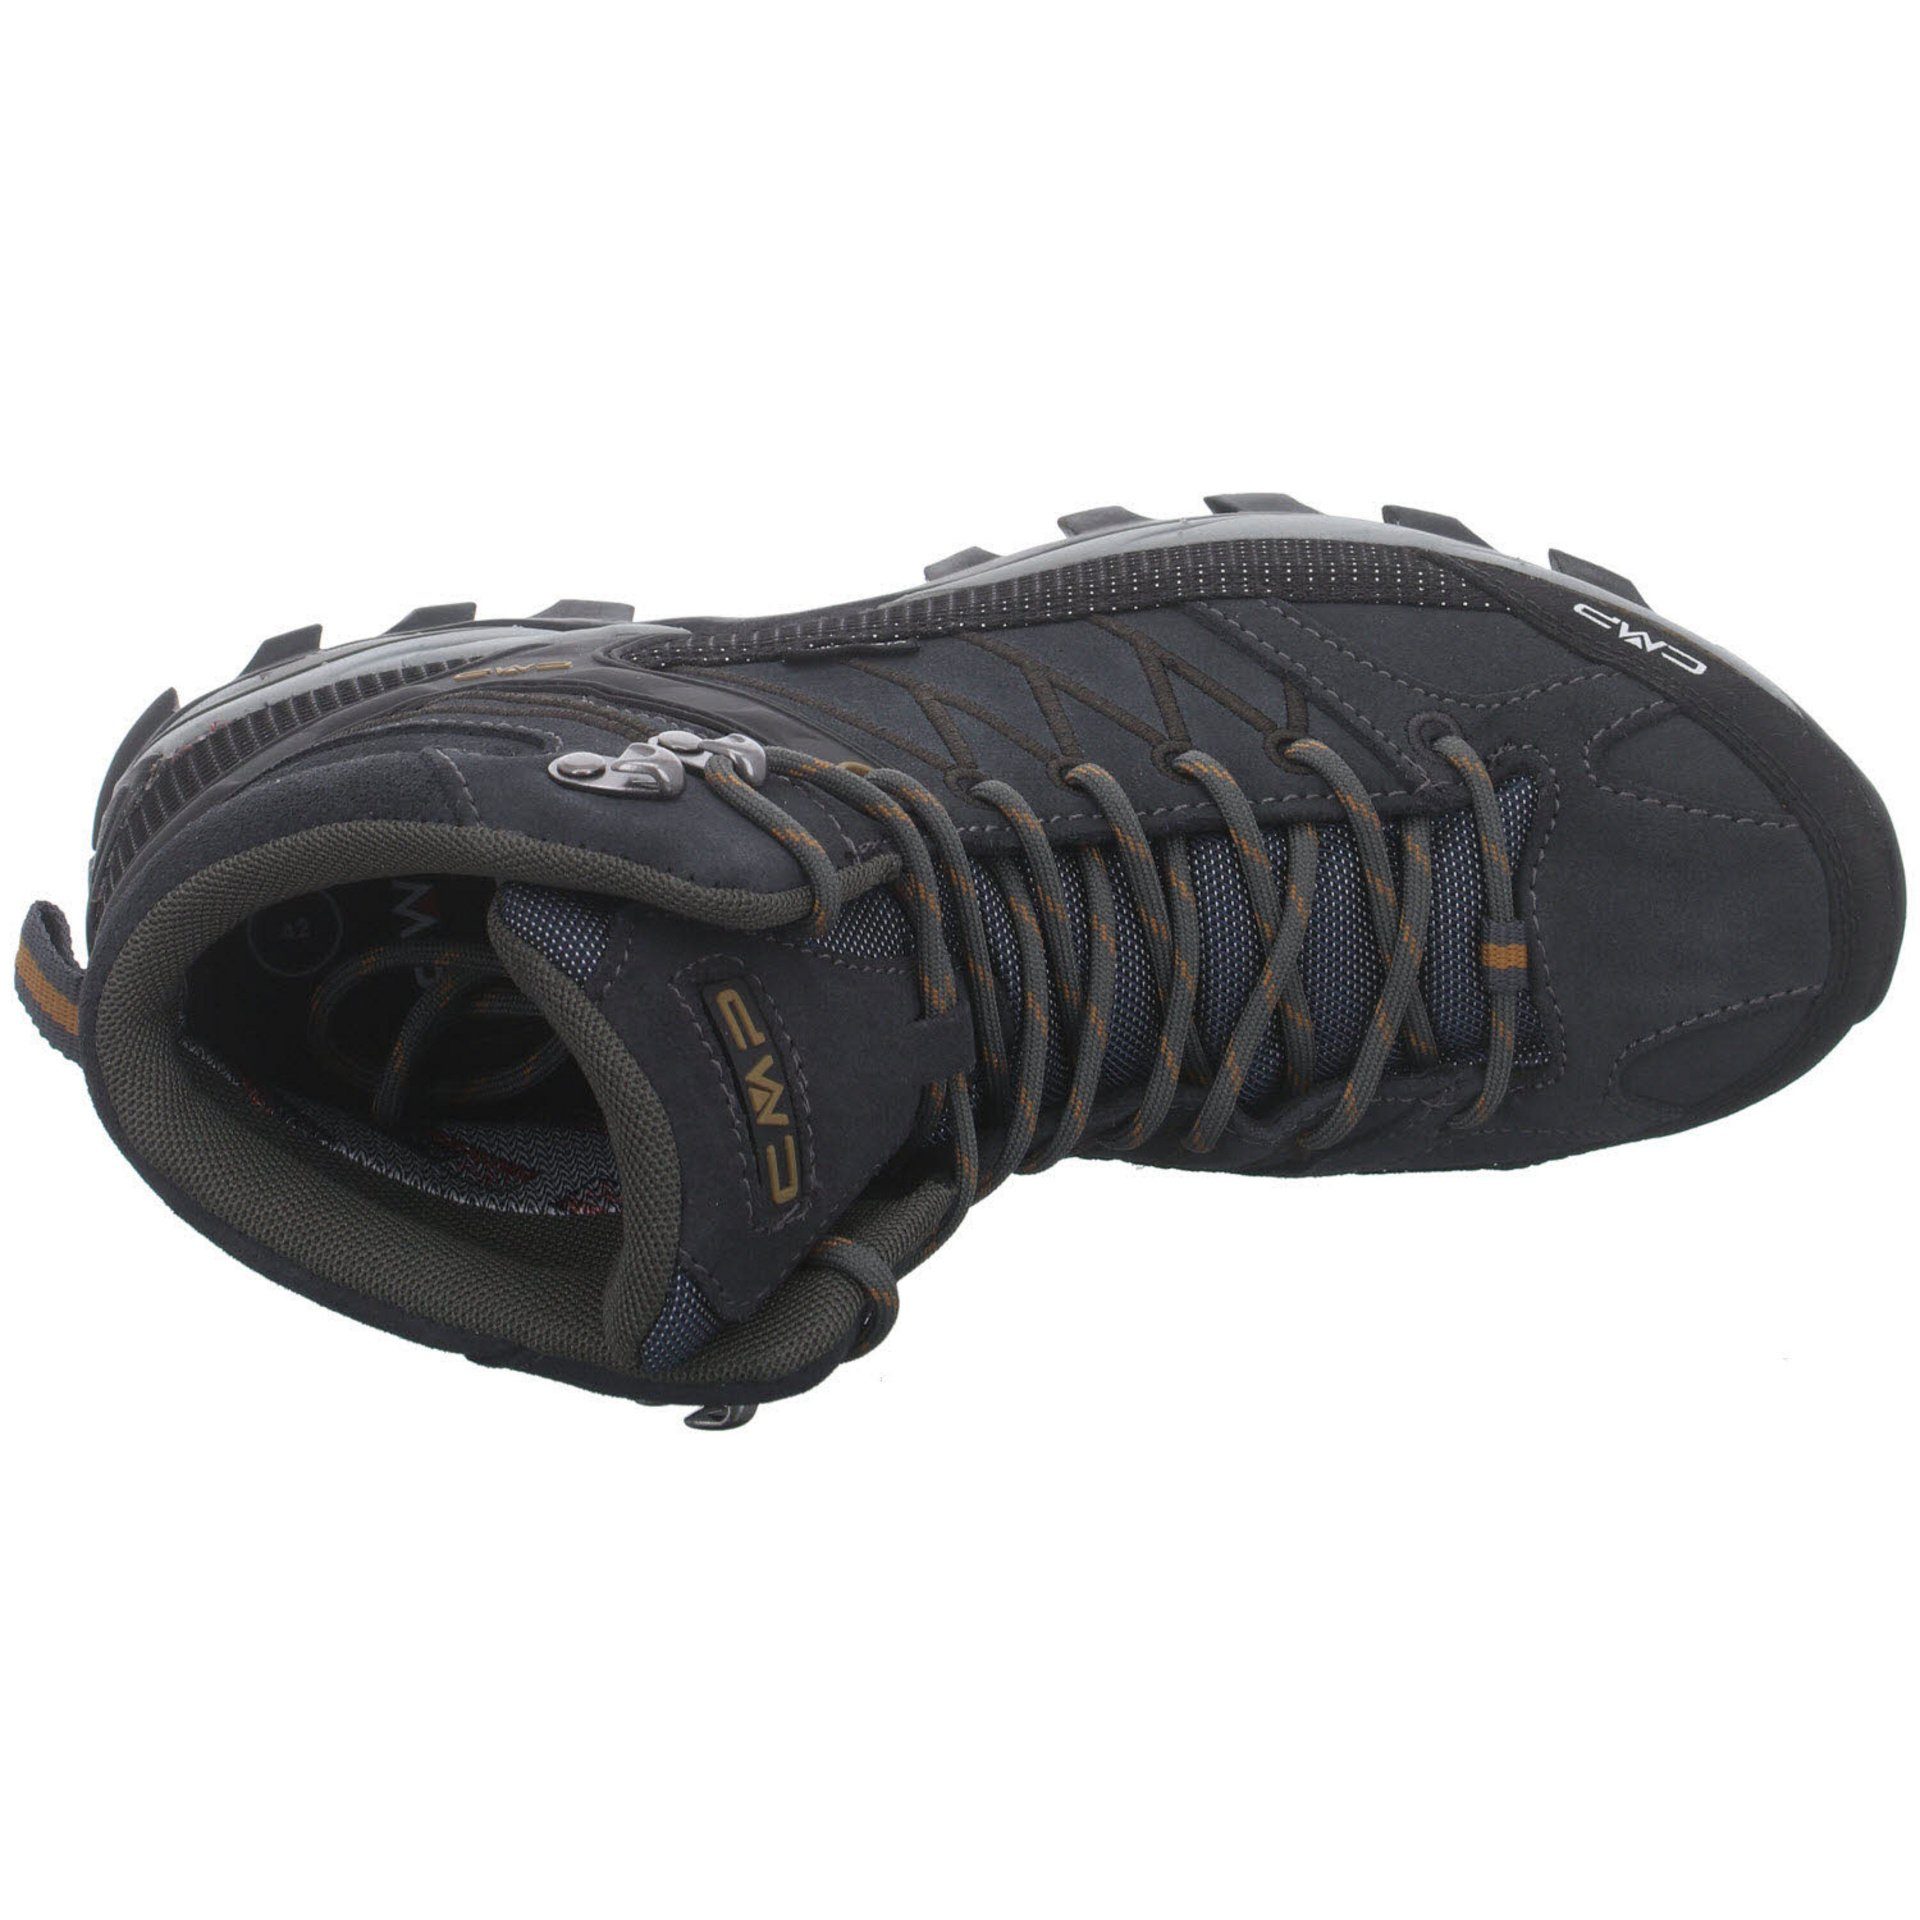 Mid CMP Outdoorschuh Schuhe Leder-/Textilkombination Rigel Outdoorschuh ANTRACITE-ARABICA Herren Outdoor